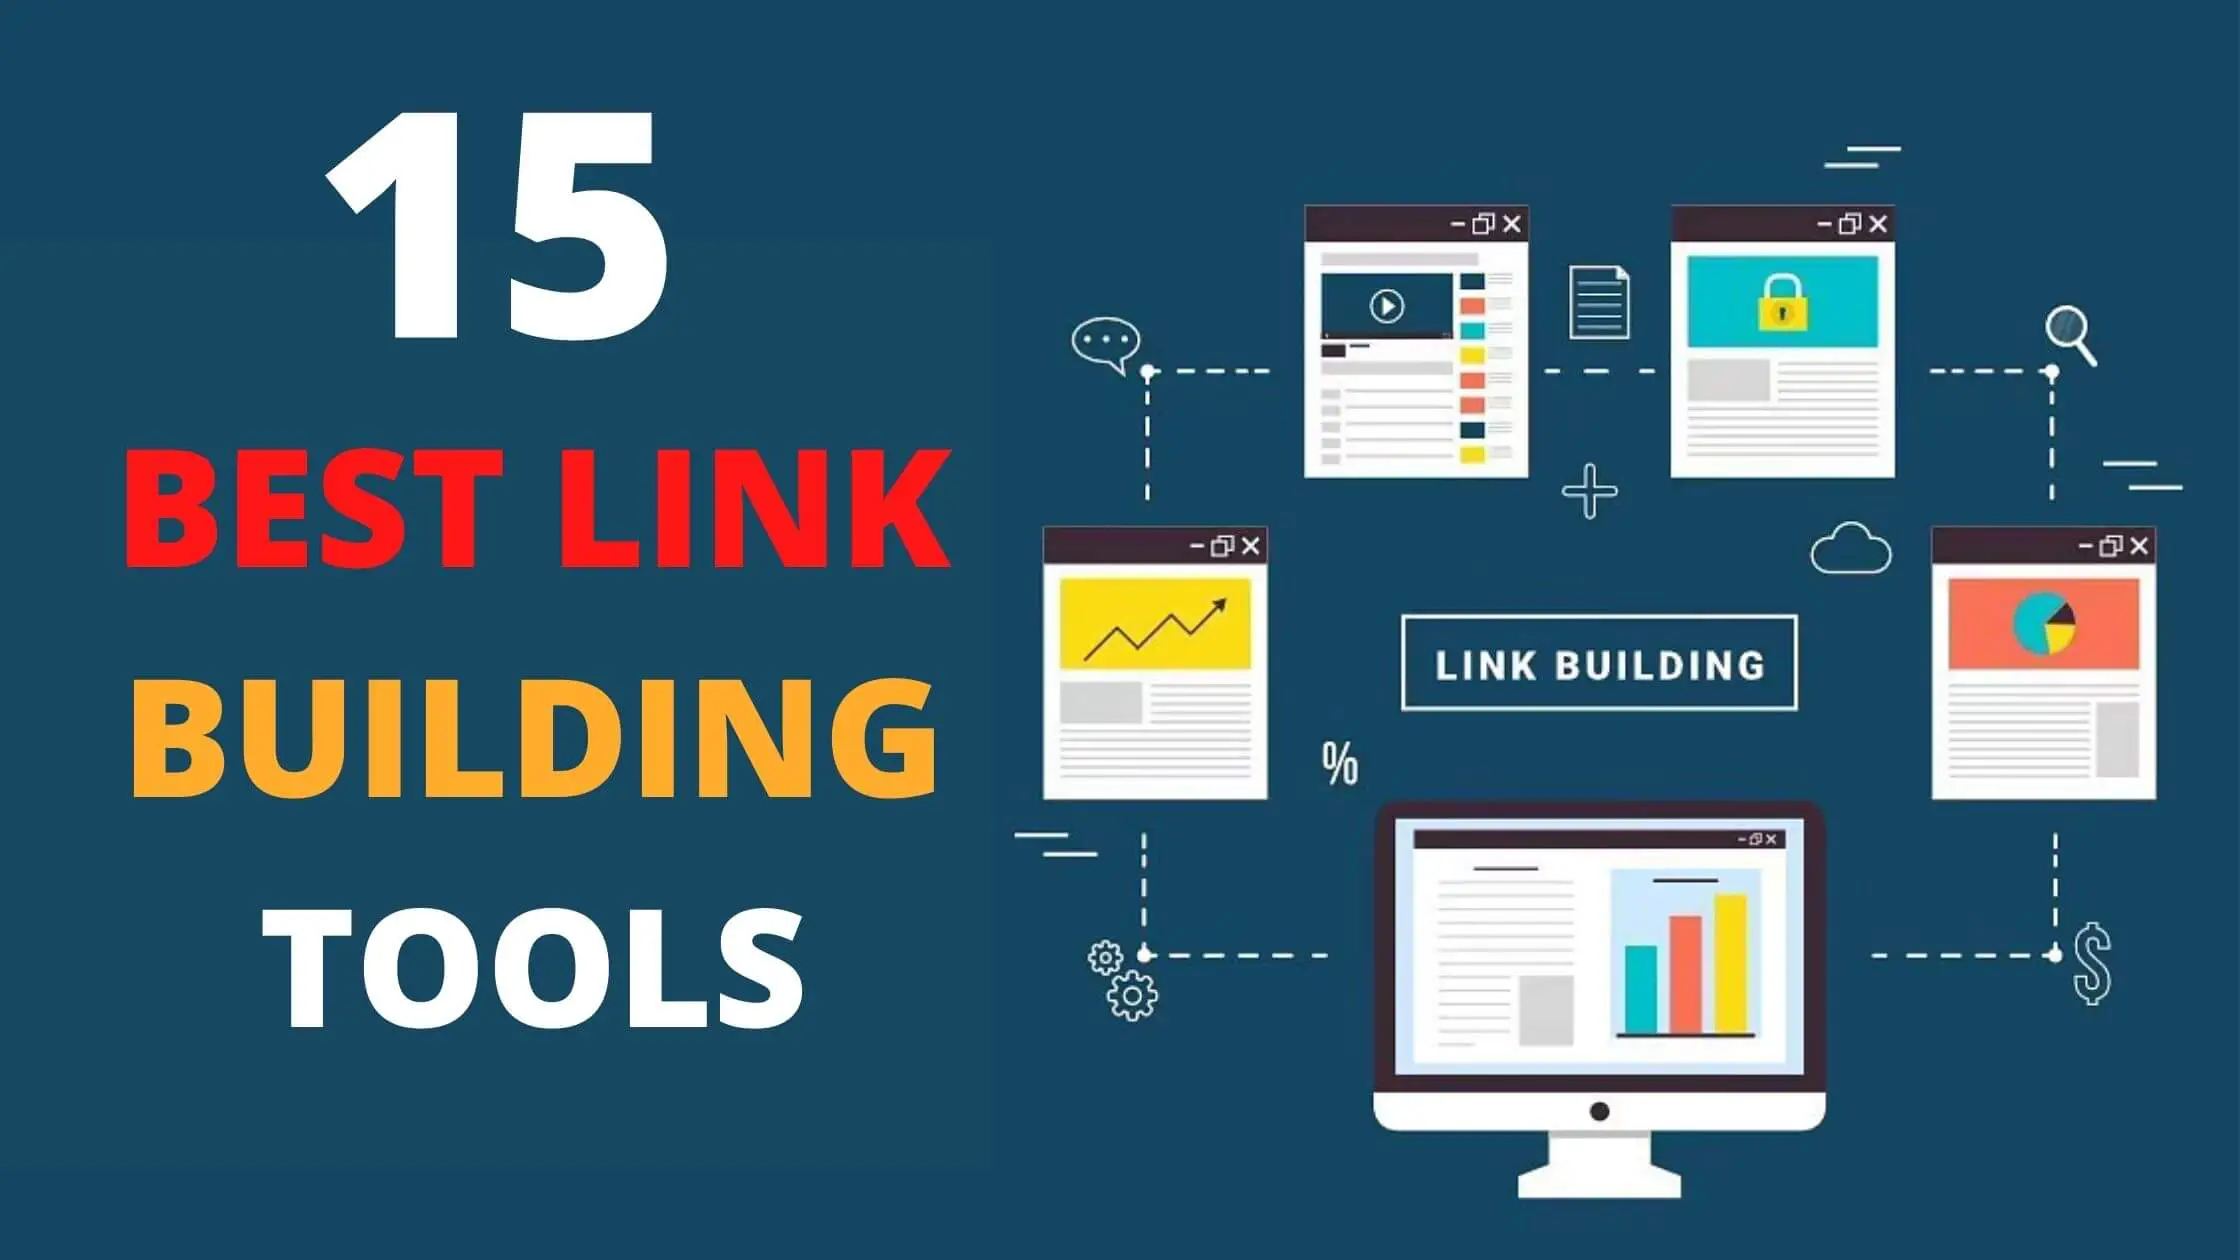 Best link building tools